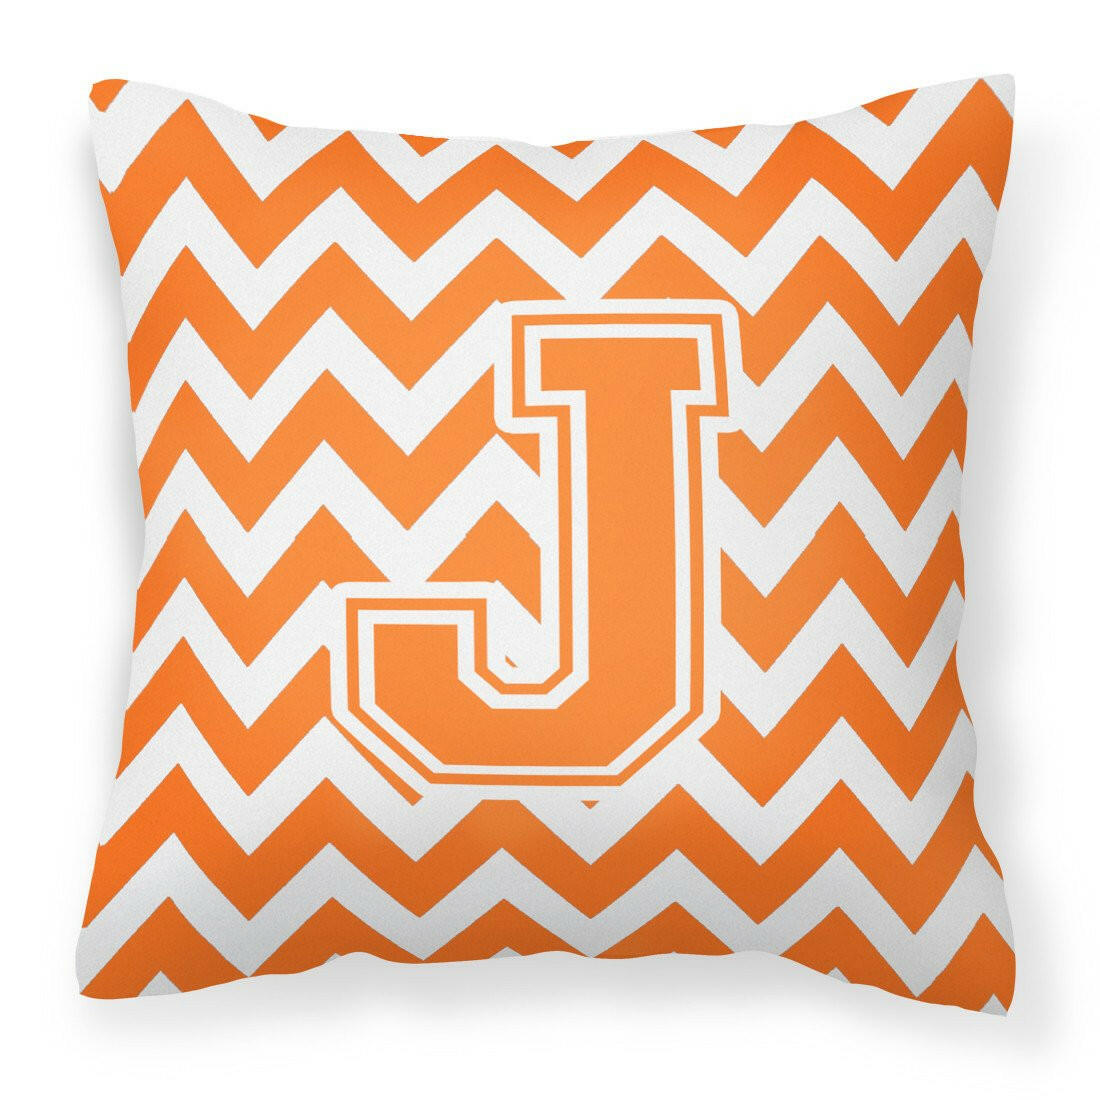 Letter J Chevron Orange and White Fabric Decorative Pillow CJ1046-JPW1414 by Caroline's Treasures